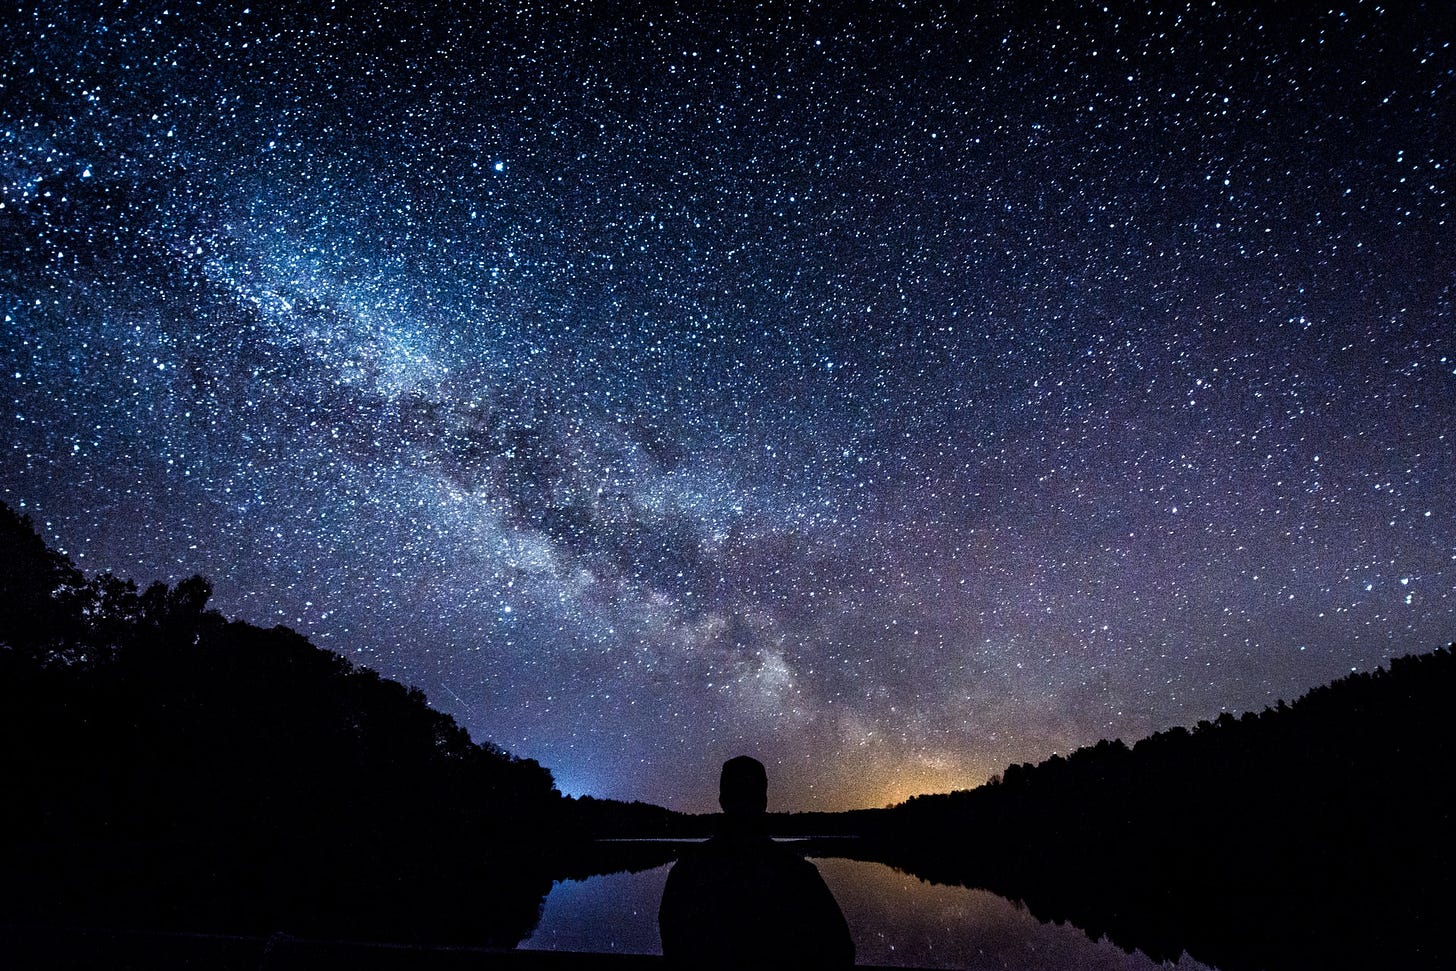 Alone under stars - Photo by Mindaugas Vitkus on Unsplash